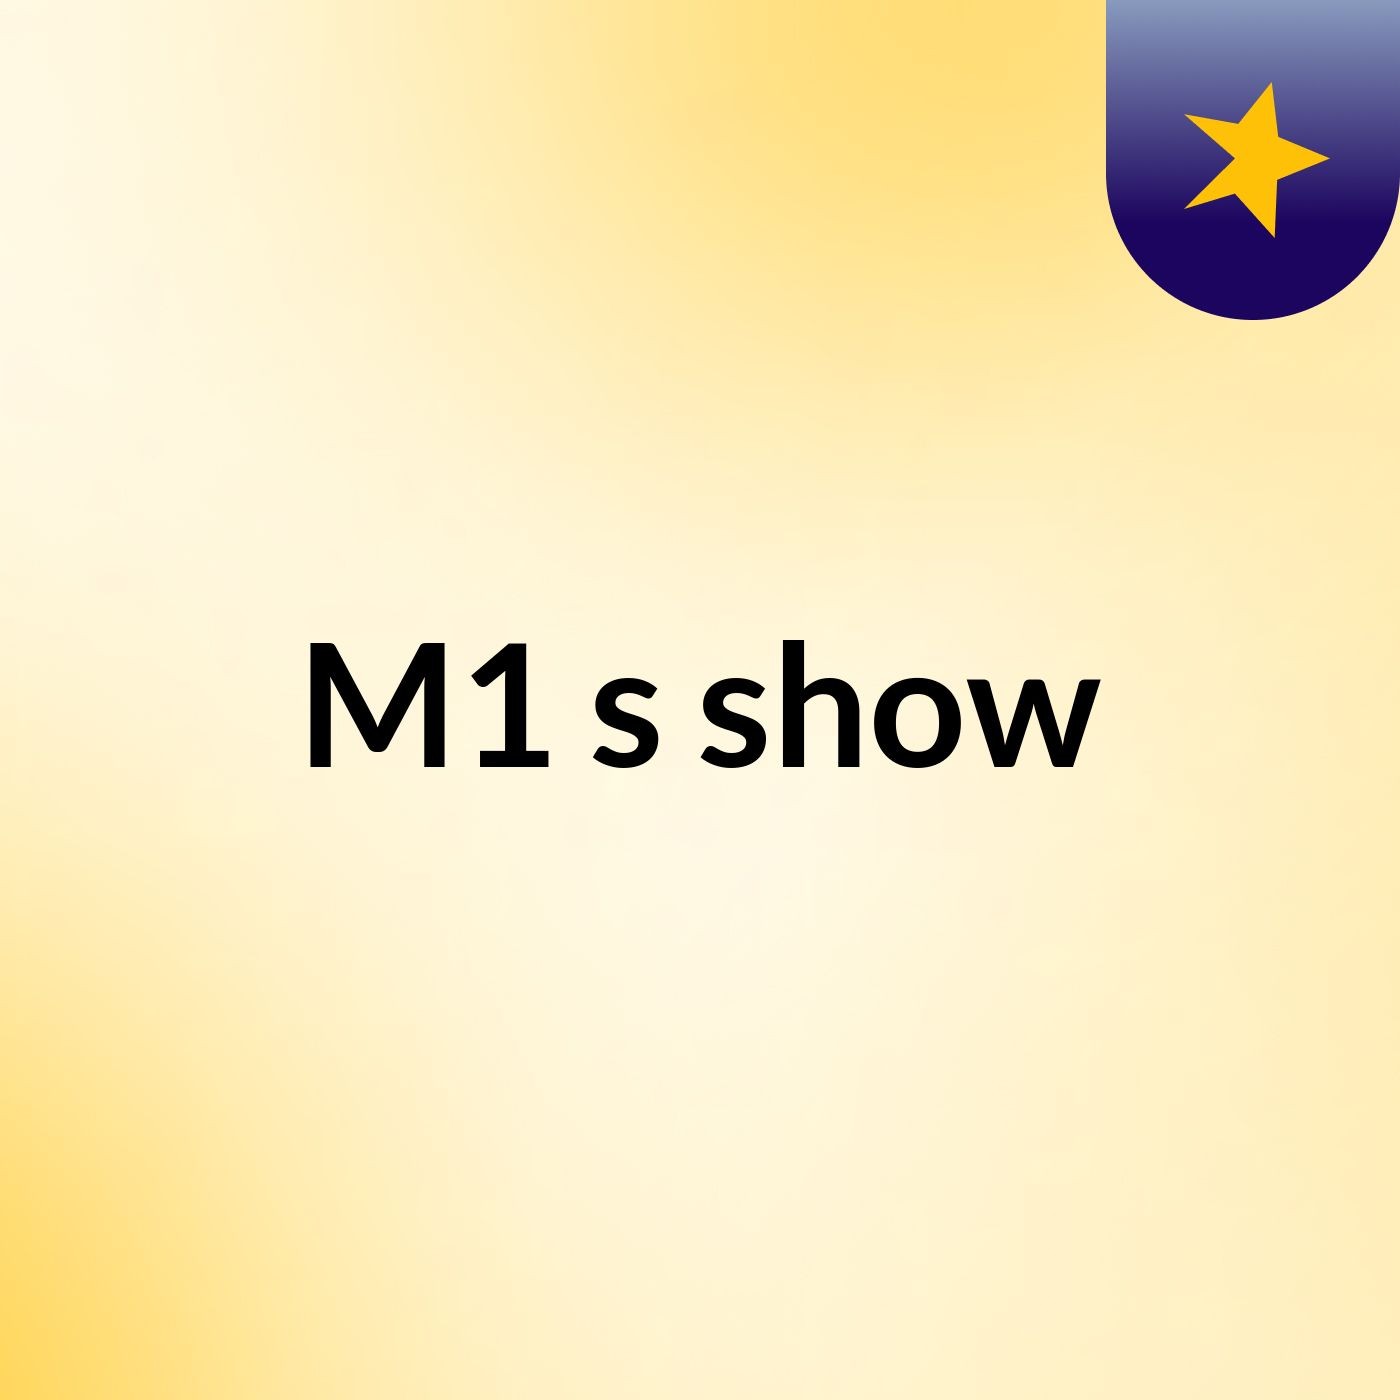 M1's show